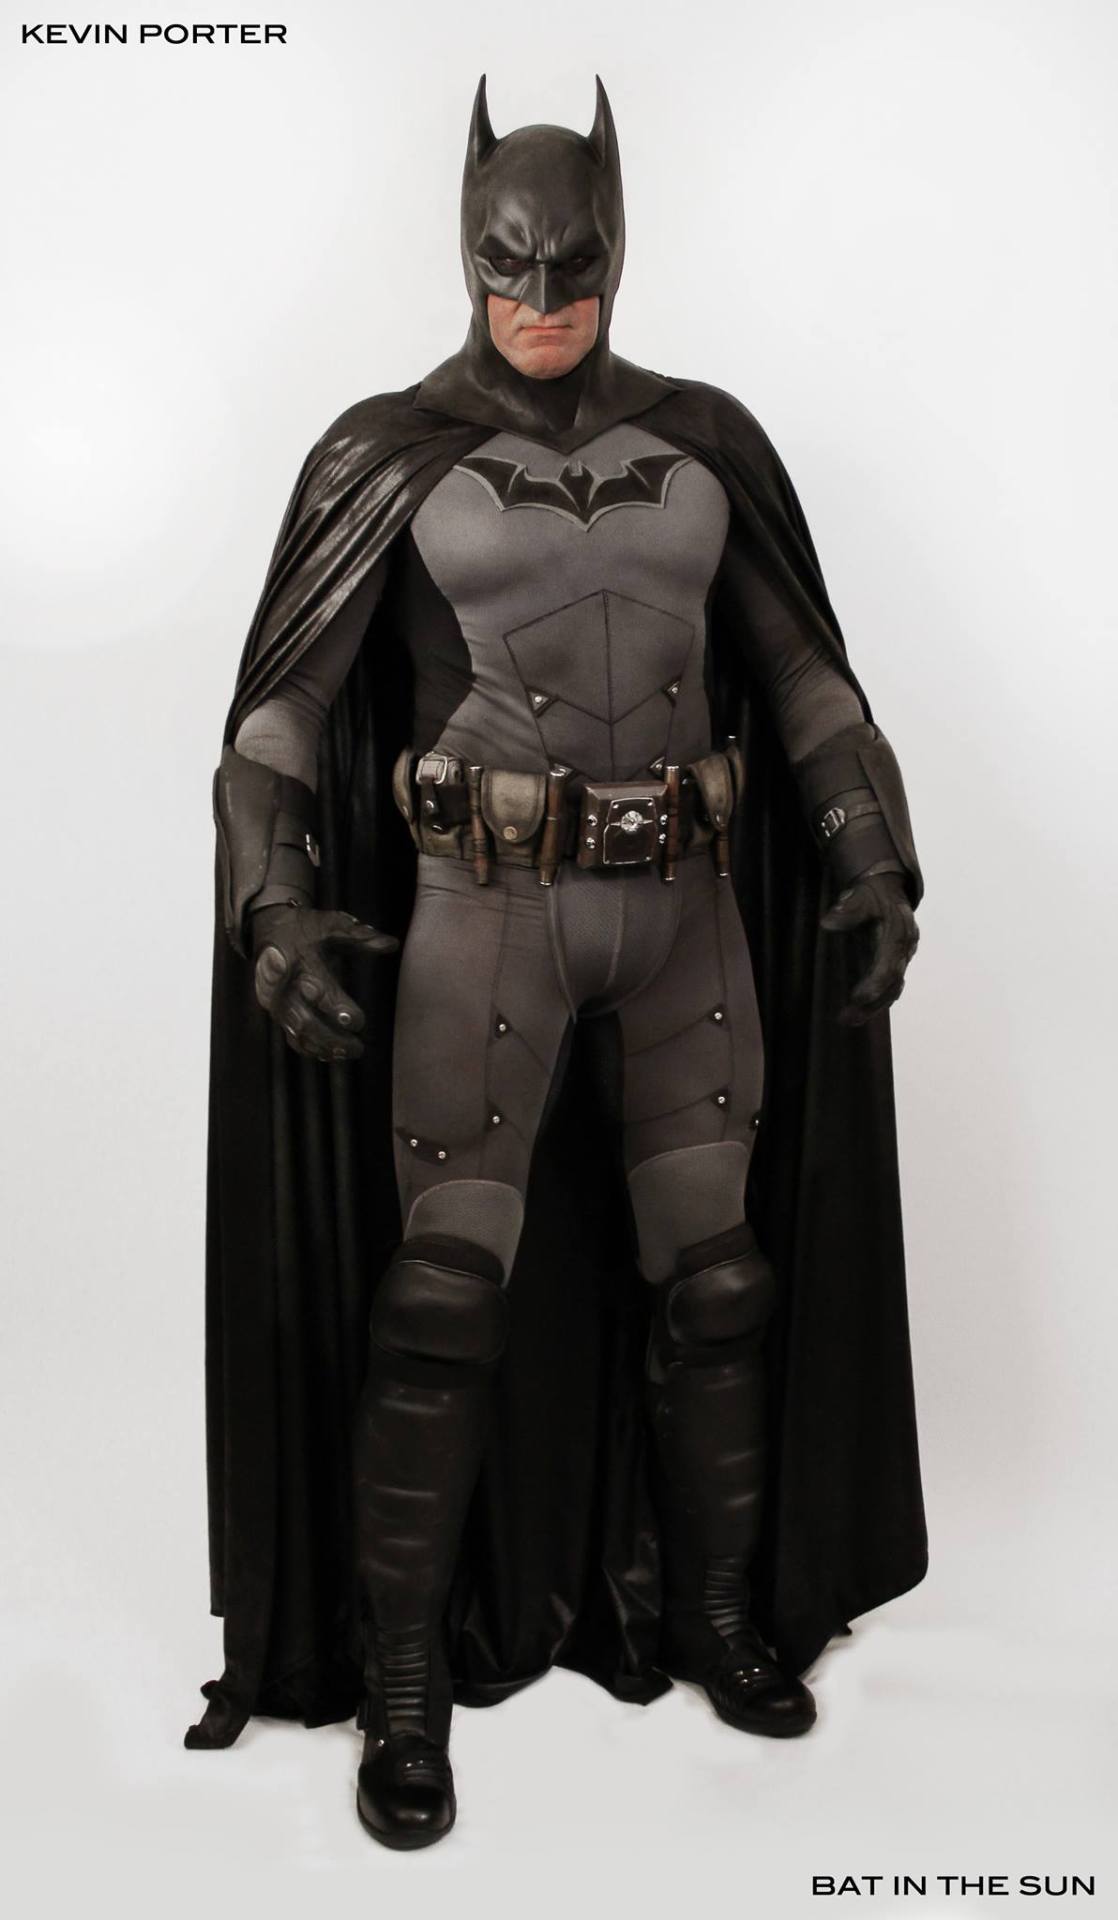 blackbatpurplecat: Batman - Kevin Porter